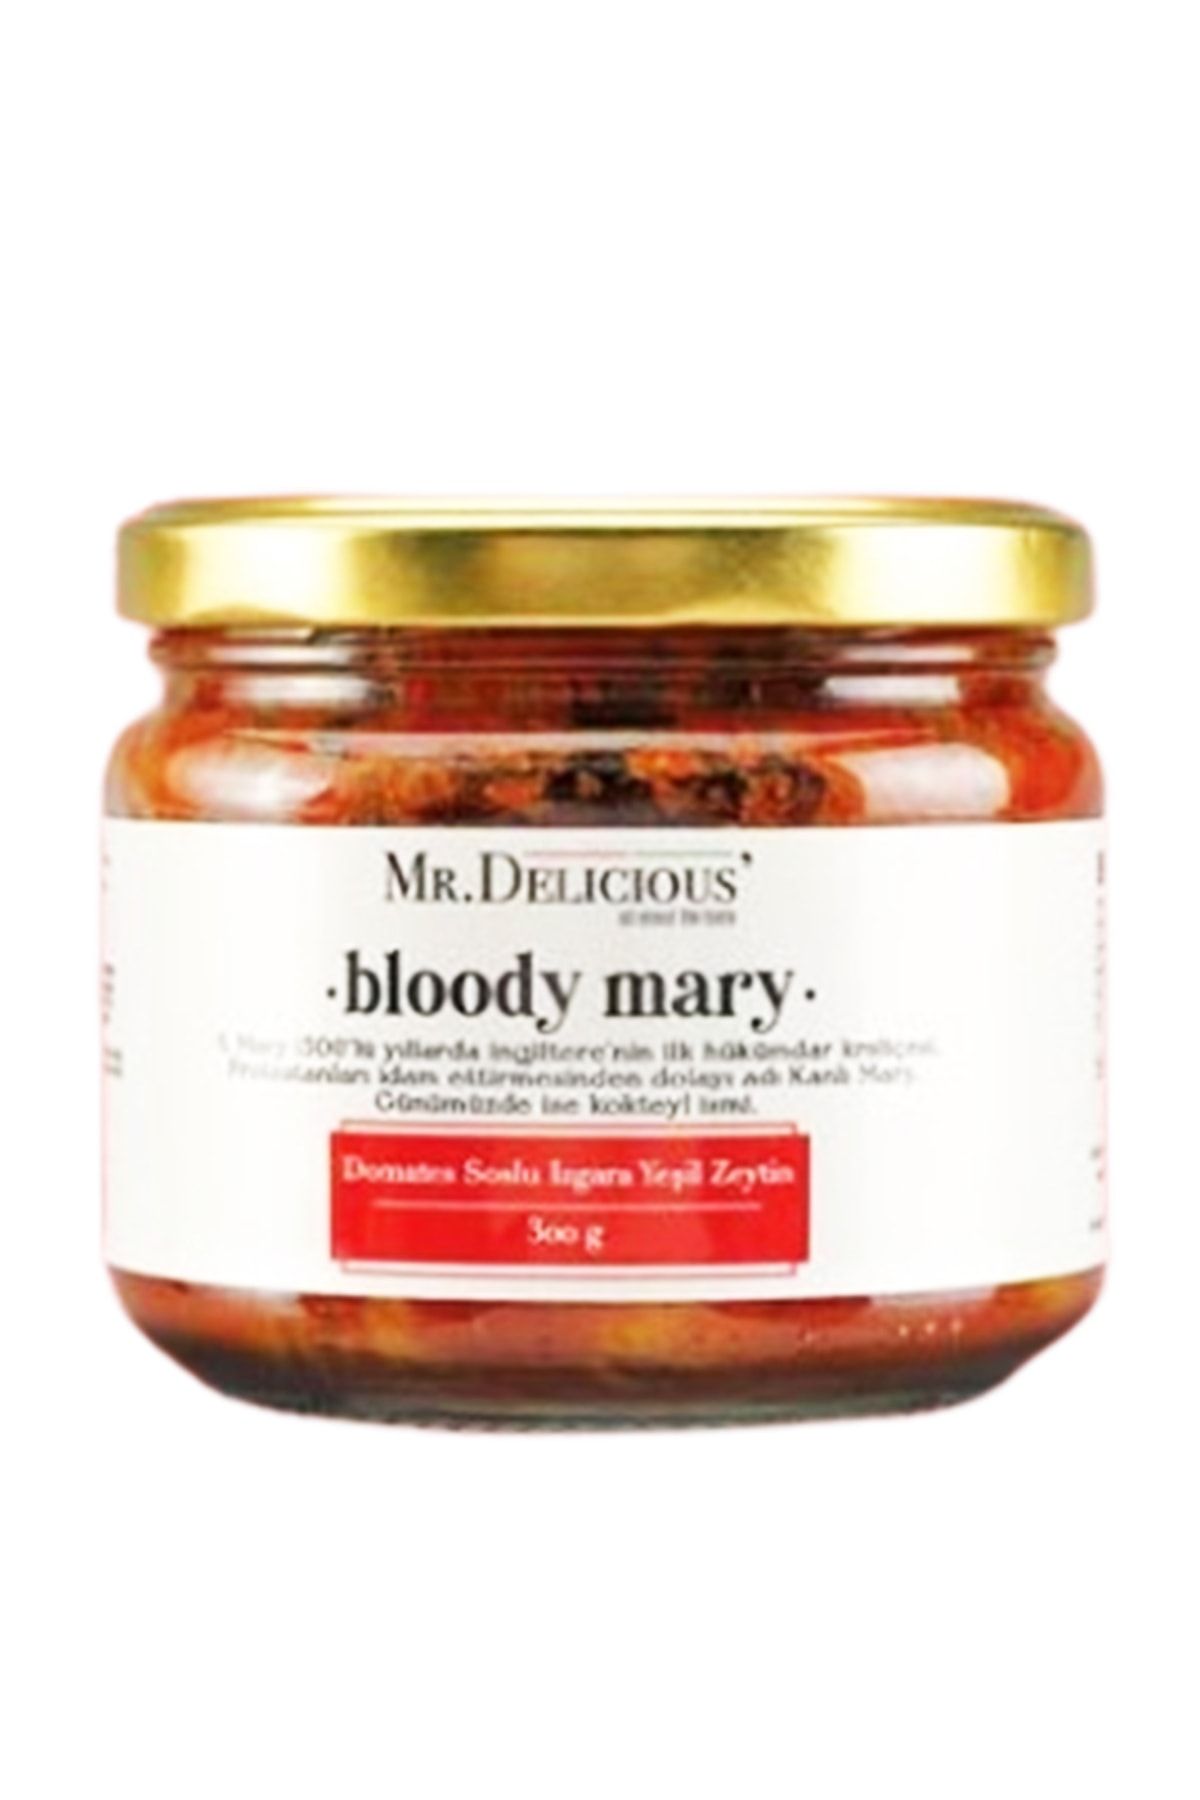 Mr.Delicious' Domates Soslu Izgara Yeşil Zeytin Bloody Mary